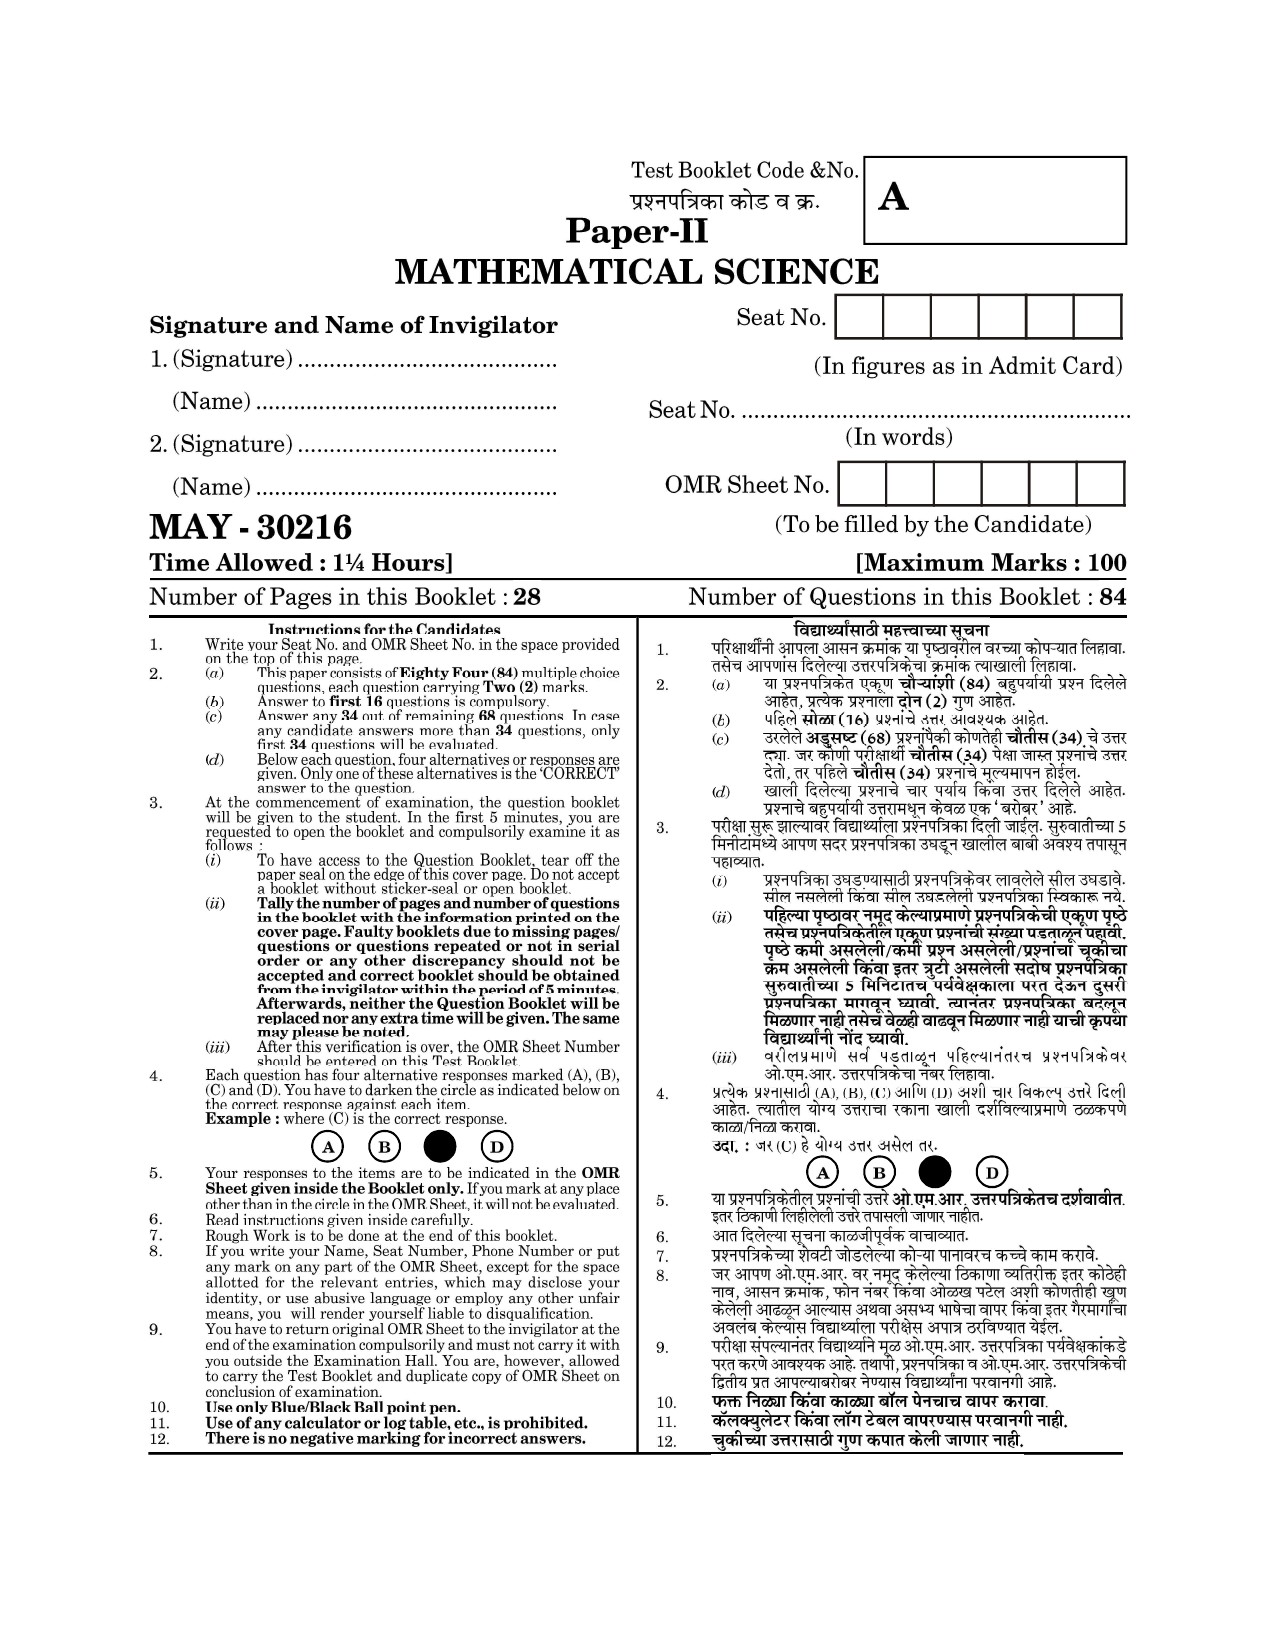 Maharashtra SET Mathematical Sciences Question Paper II May 2016 1